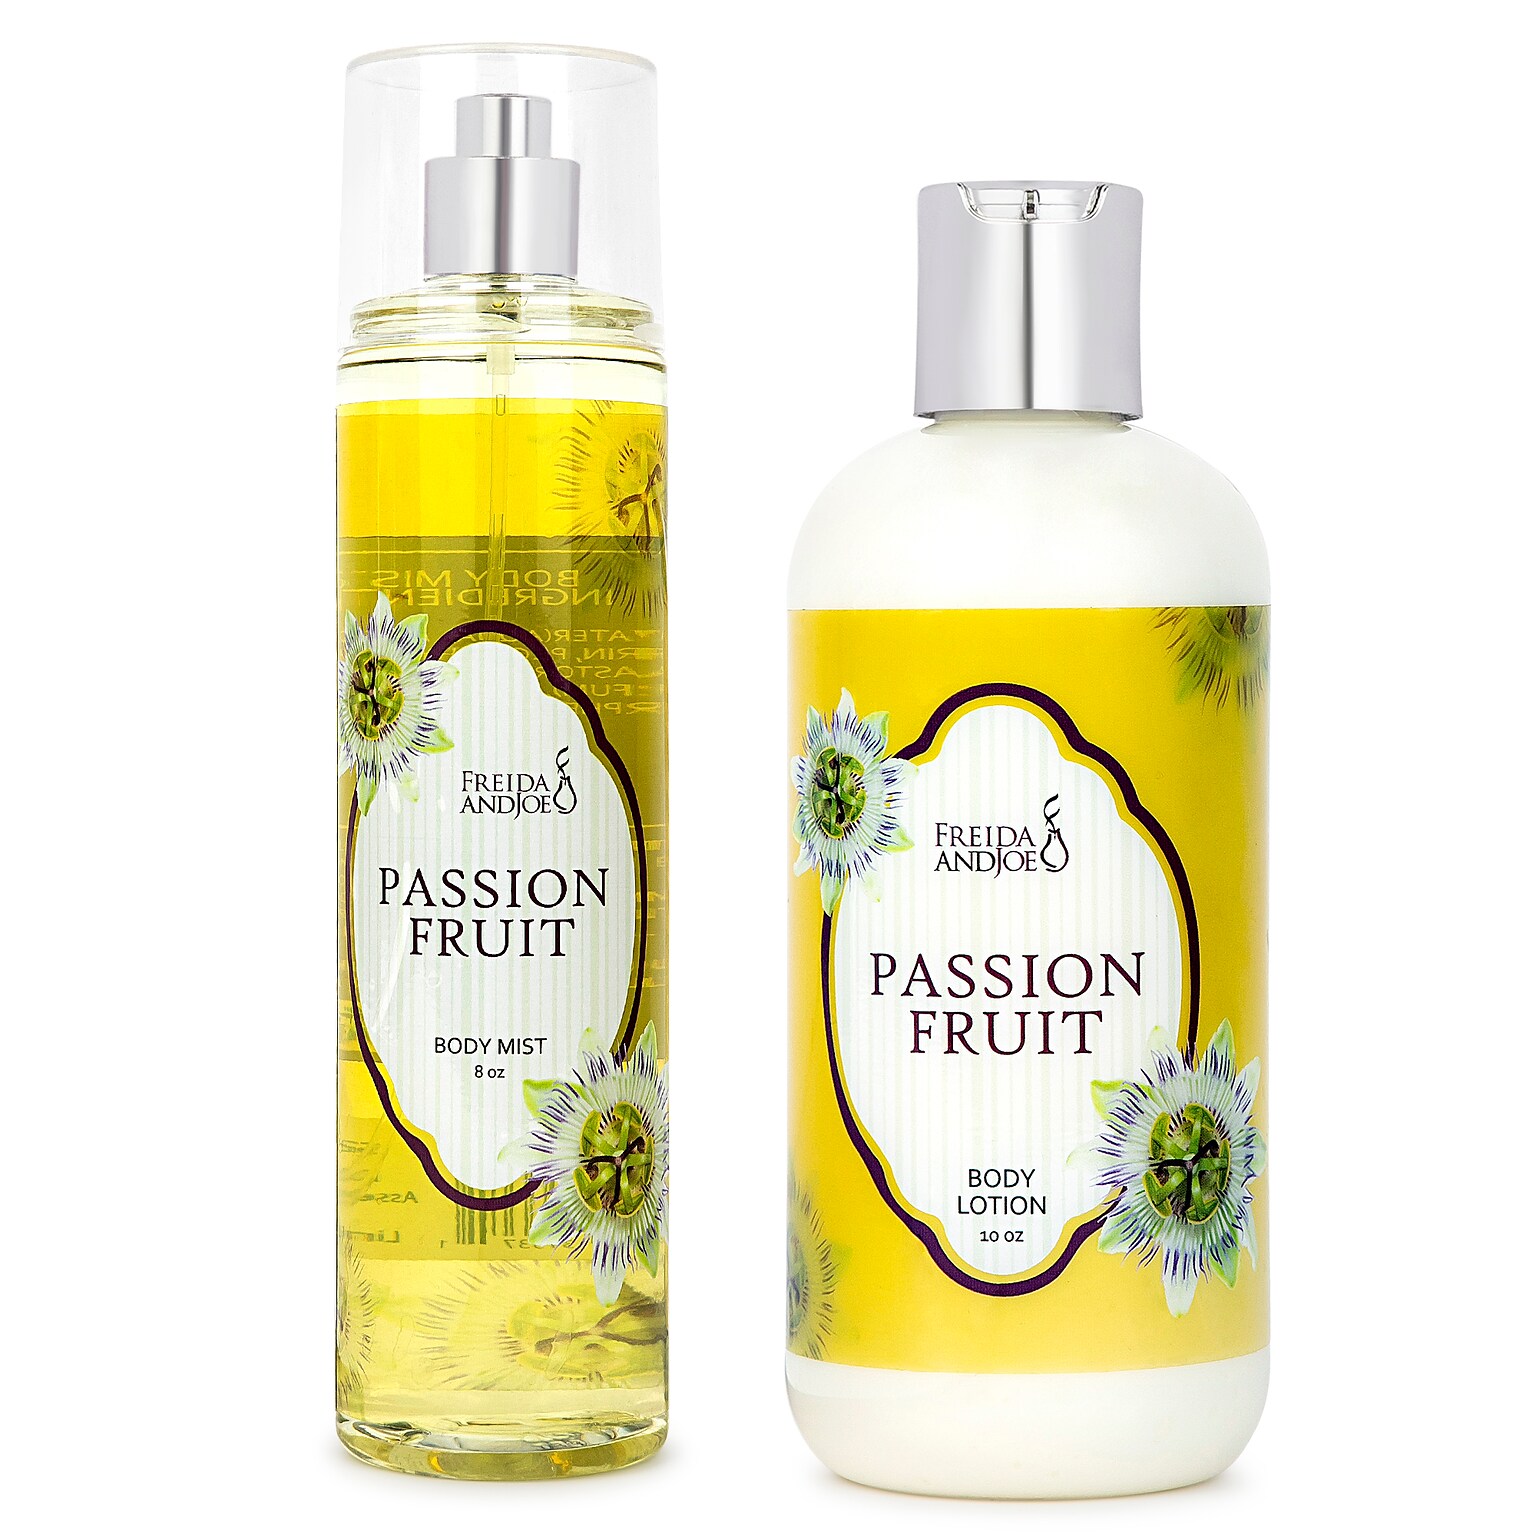 Freida and Joe Passion Fruit Fragrance Body Lotion and Body Mist Spray Set (FJ-705)